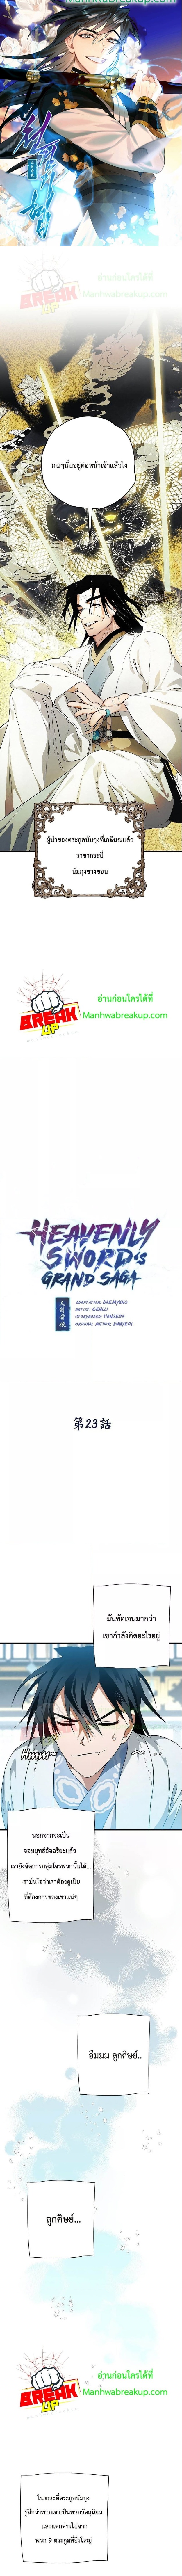 Heavenly Sword’s Grand Saga23 (1)